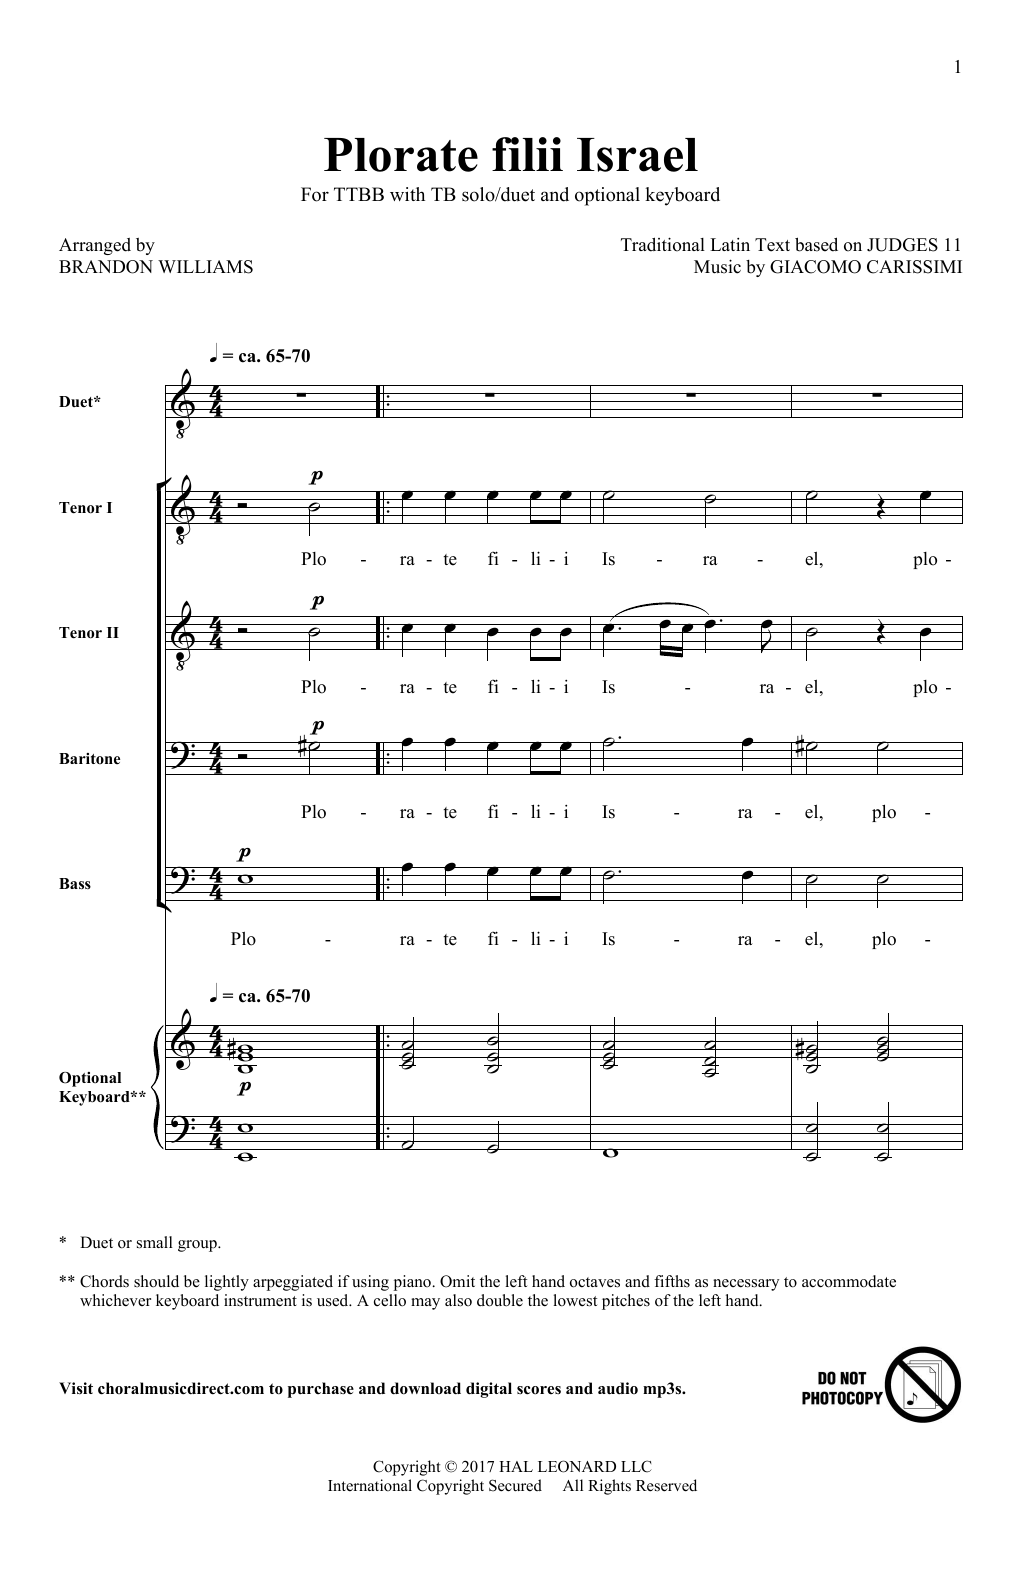 Brandon Williams Plorate Filii Israel Sheet Music Notes & Chords for TTBB - Download or Print PDF